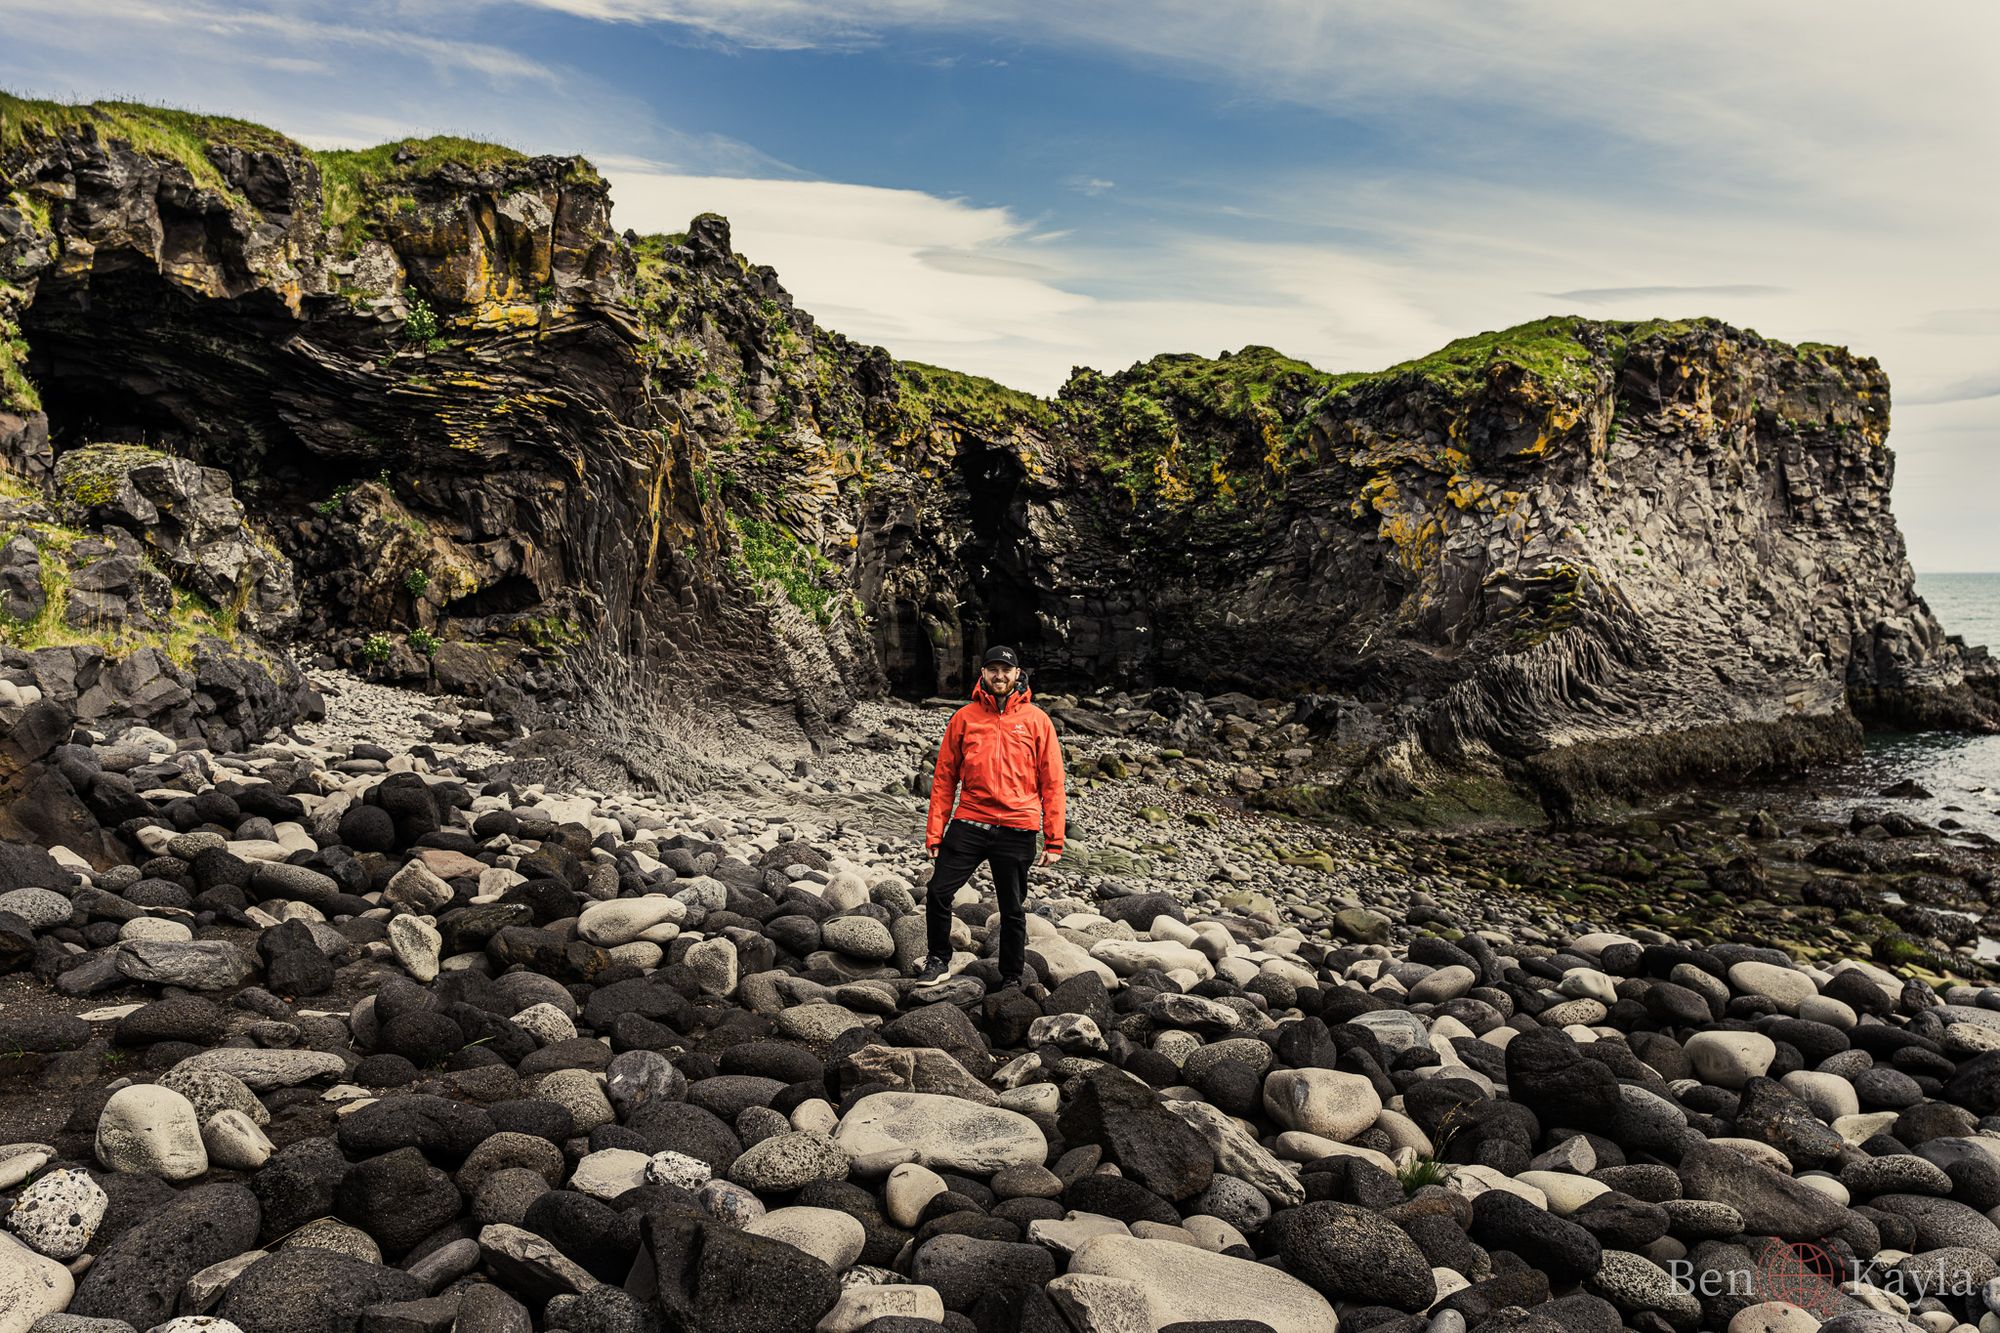 Ben standing on some rocks